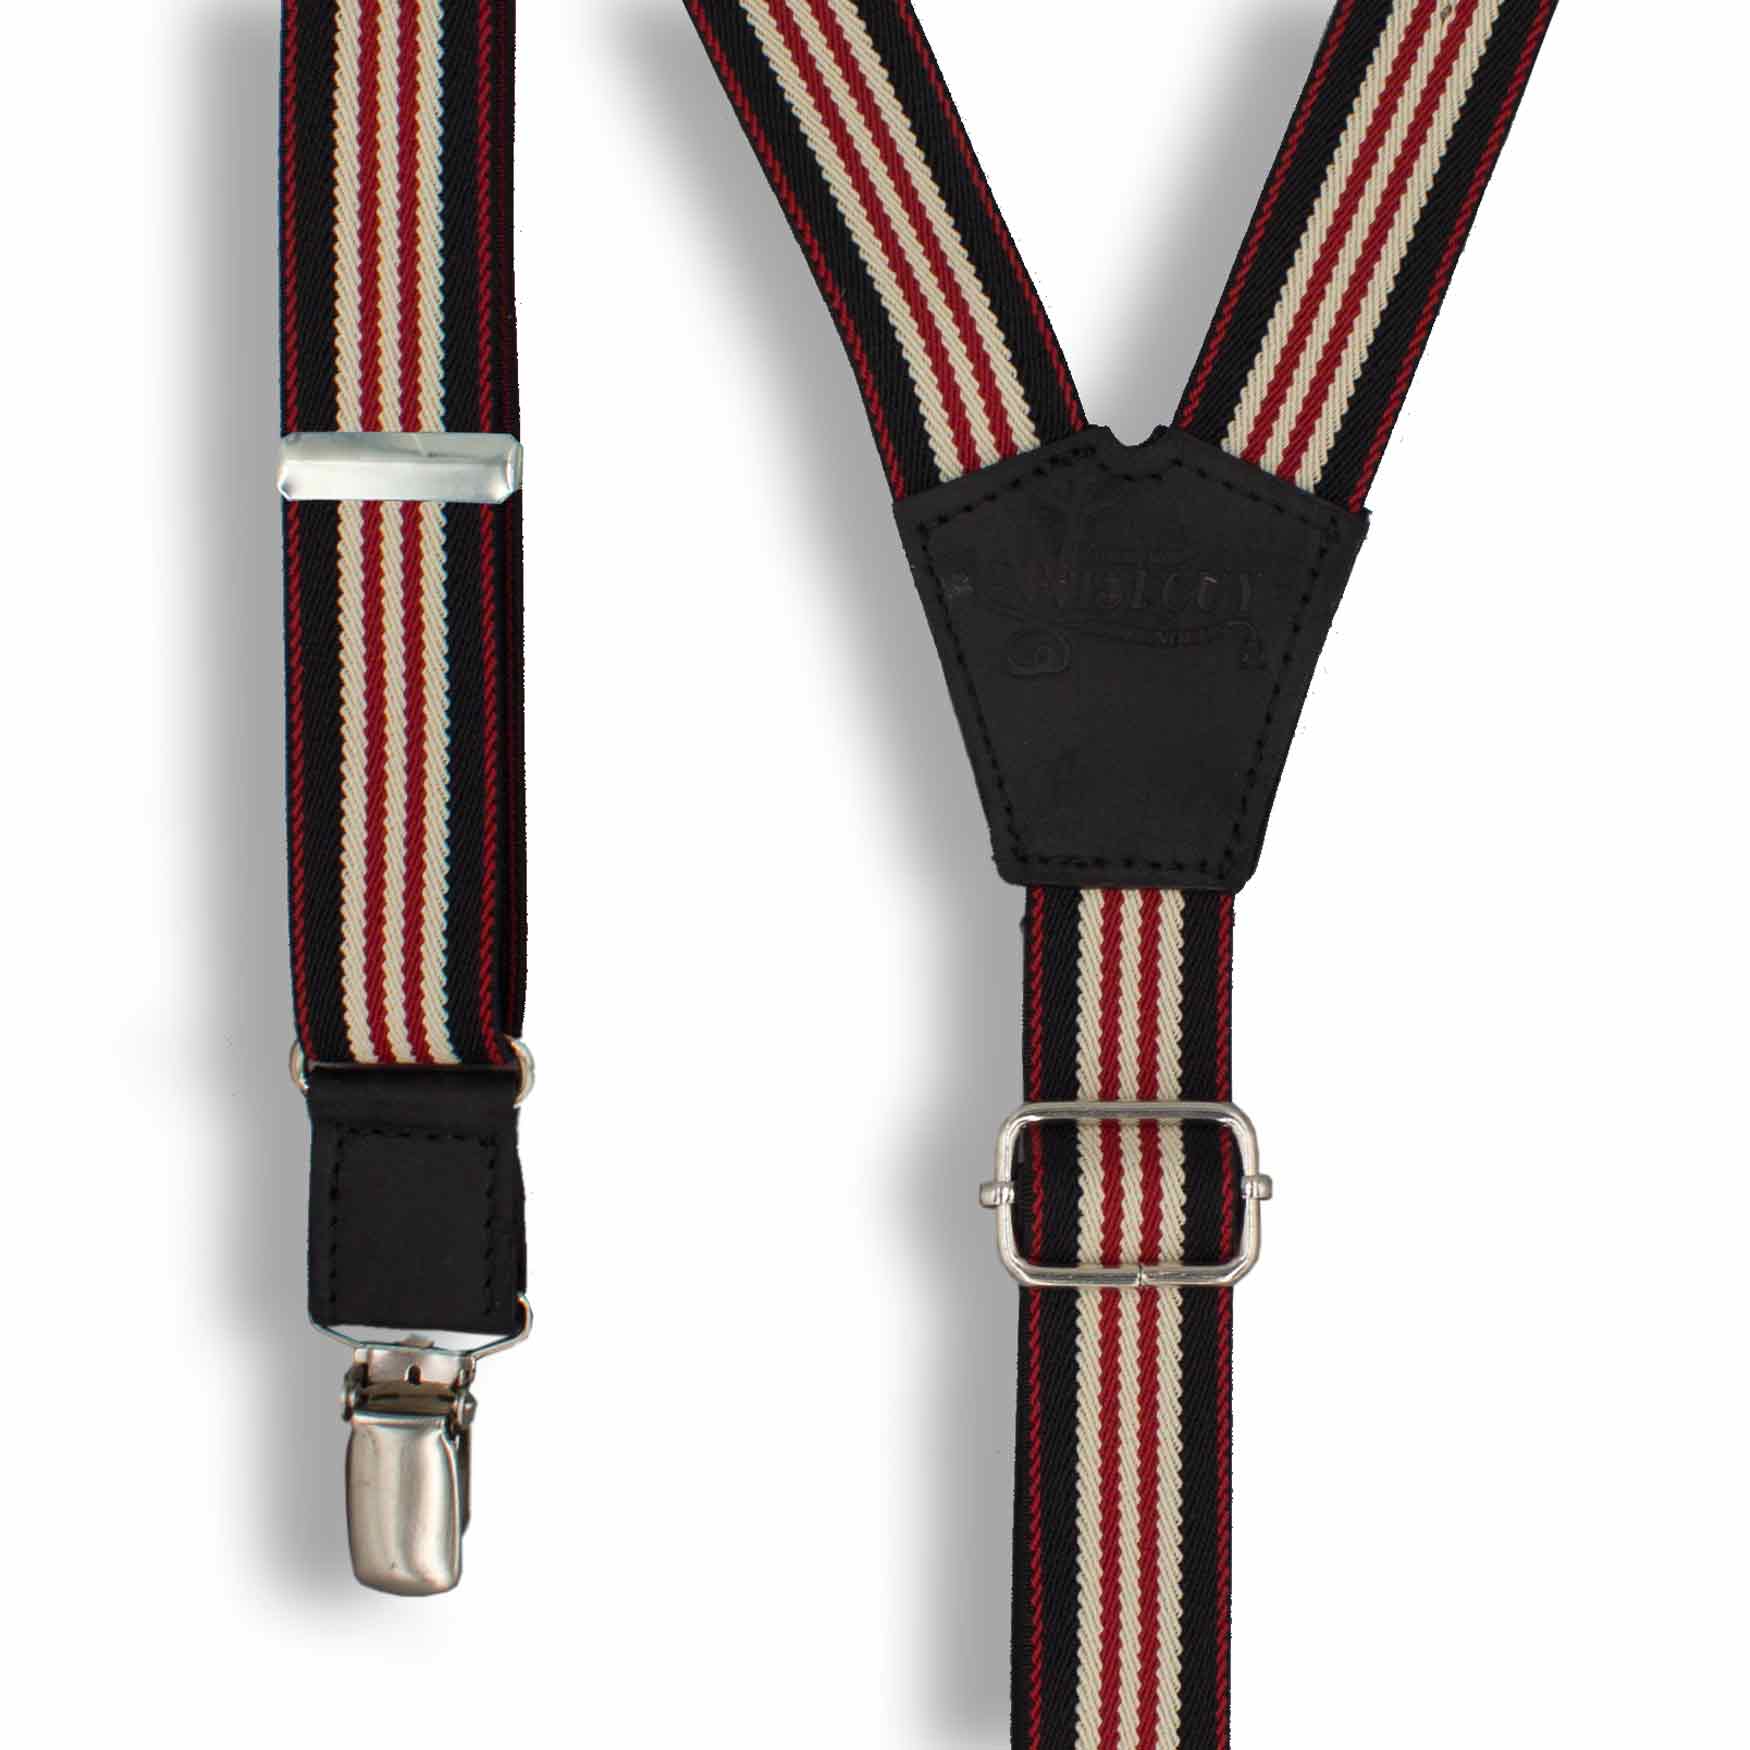 Le Mans Racing Suspenders slim straps (1 inch/2.54 cm) - Wiseguy Suspenders